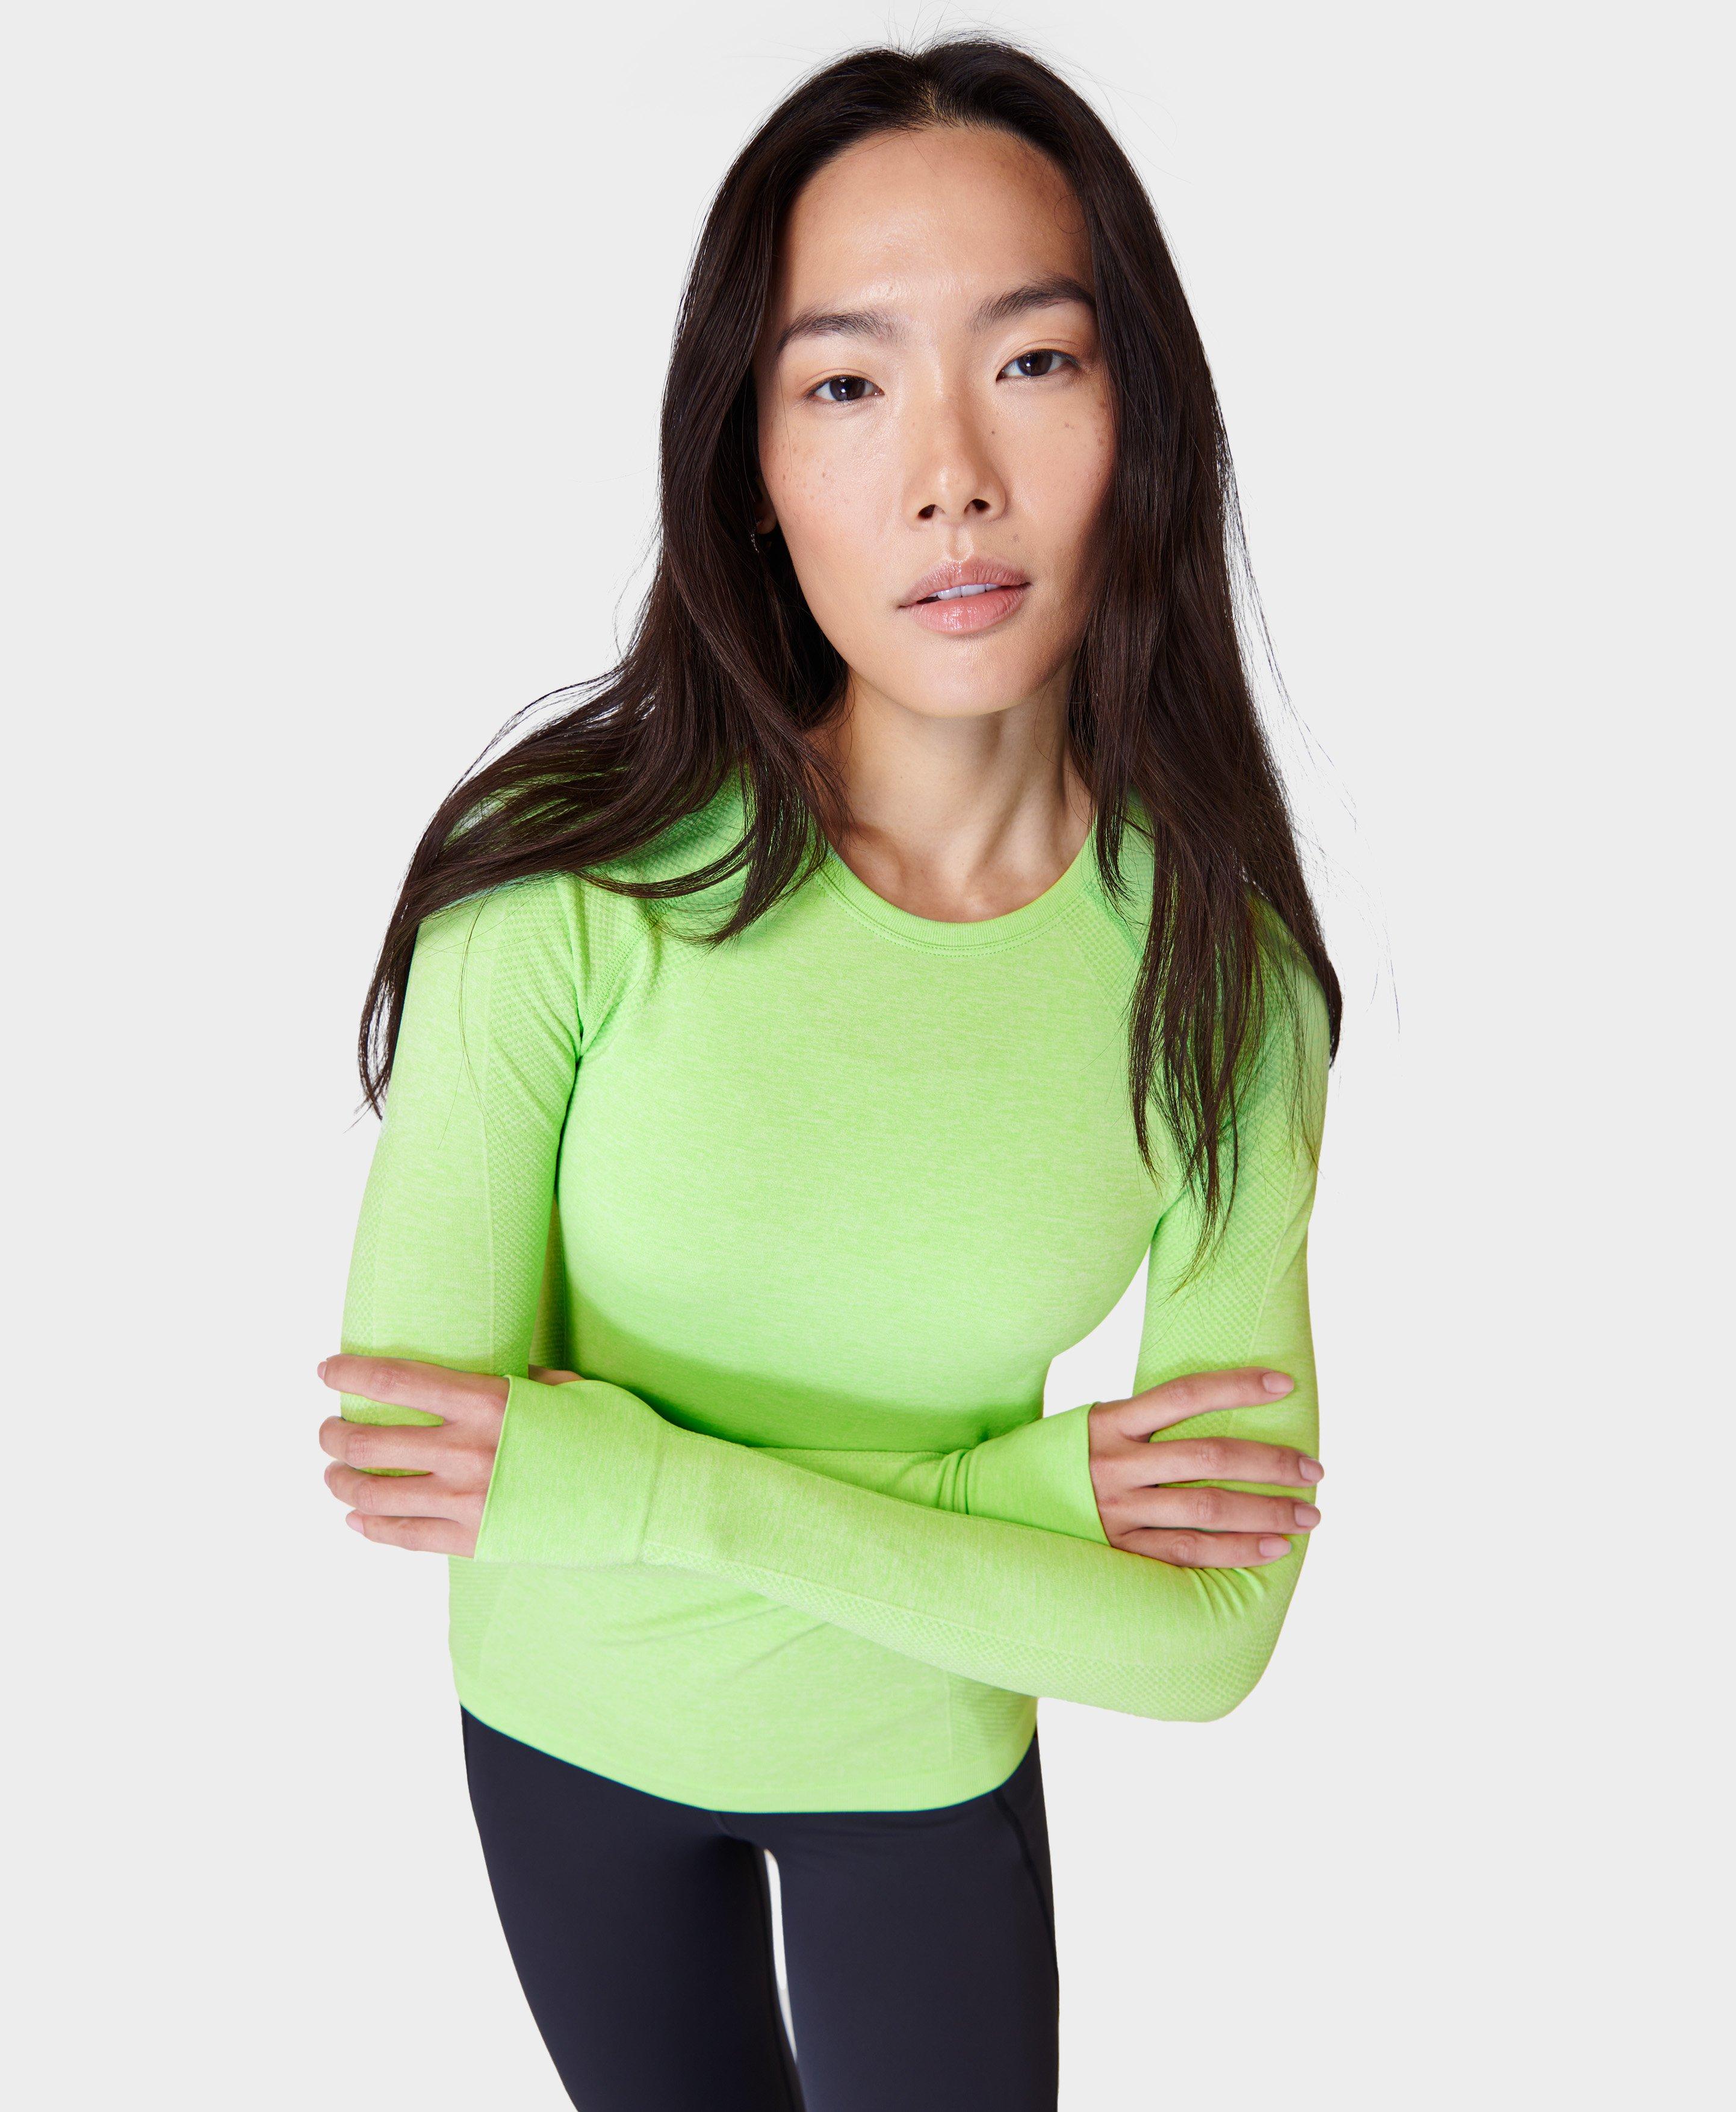 Athlete Seamless Workout Long Sleeve Top - Zest Green Marl, Women's Base  Layers & Long Sleeve Tops